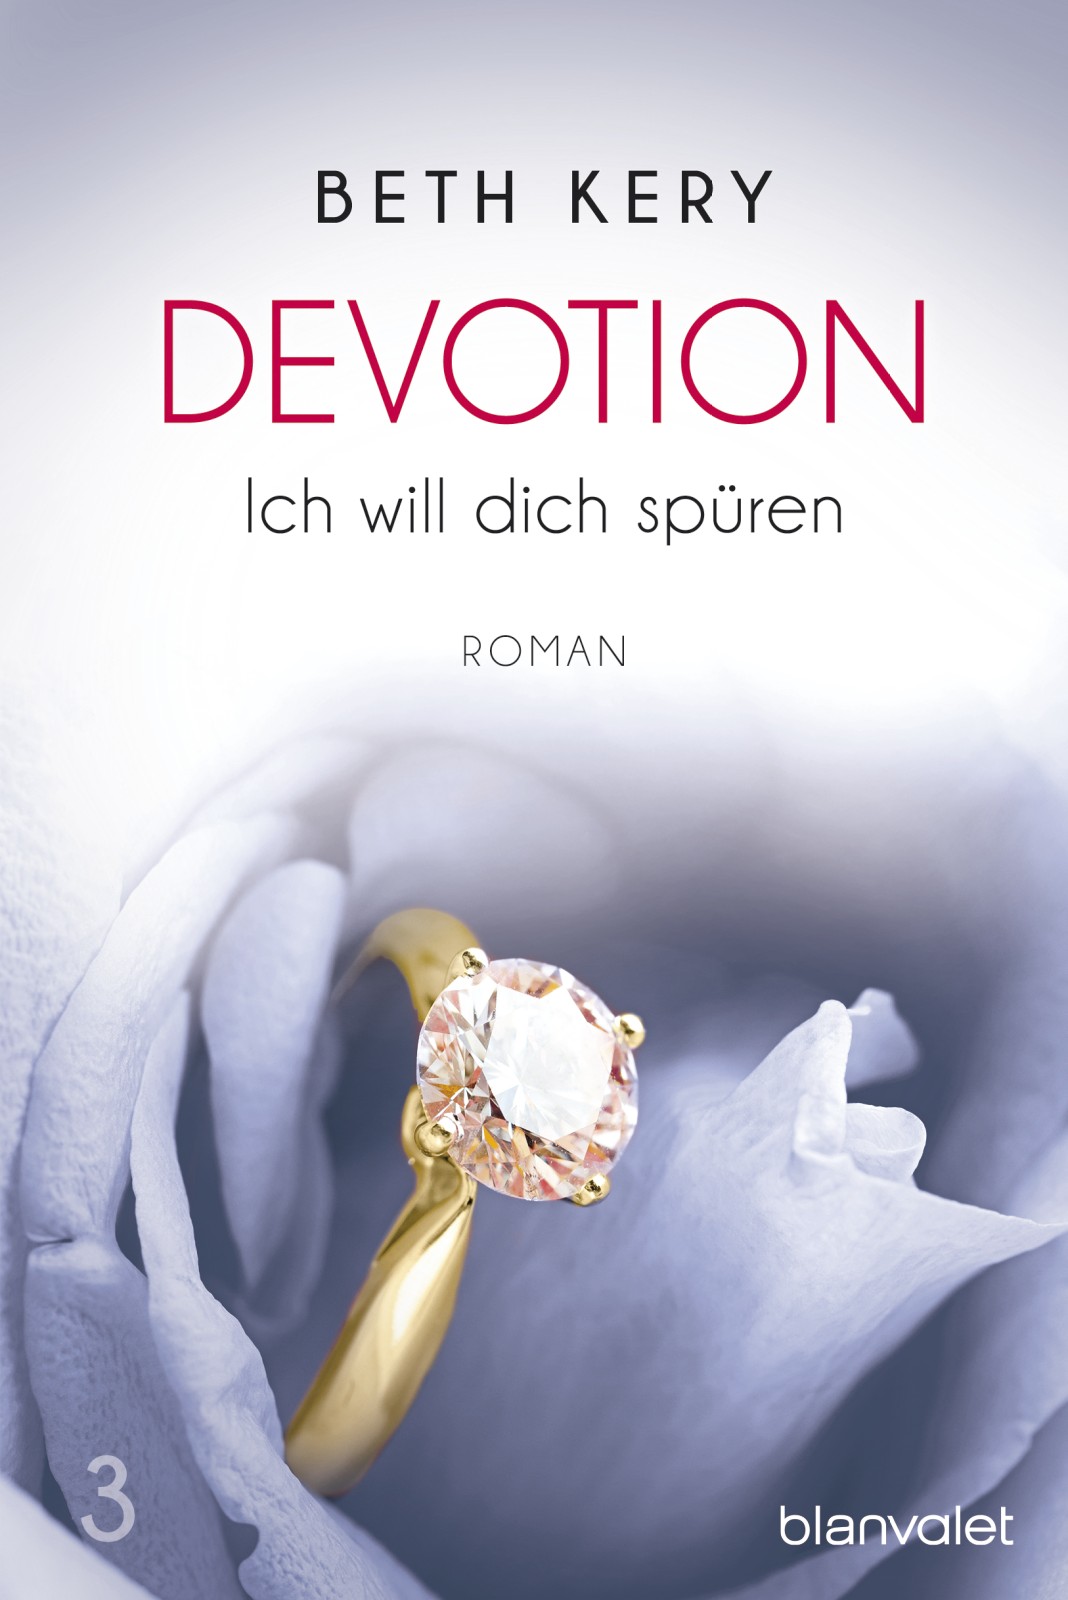 Devotion 3 - Ich will dich spüren Roman